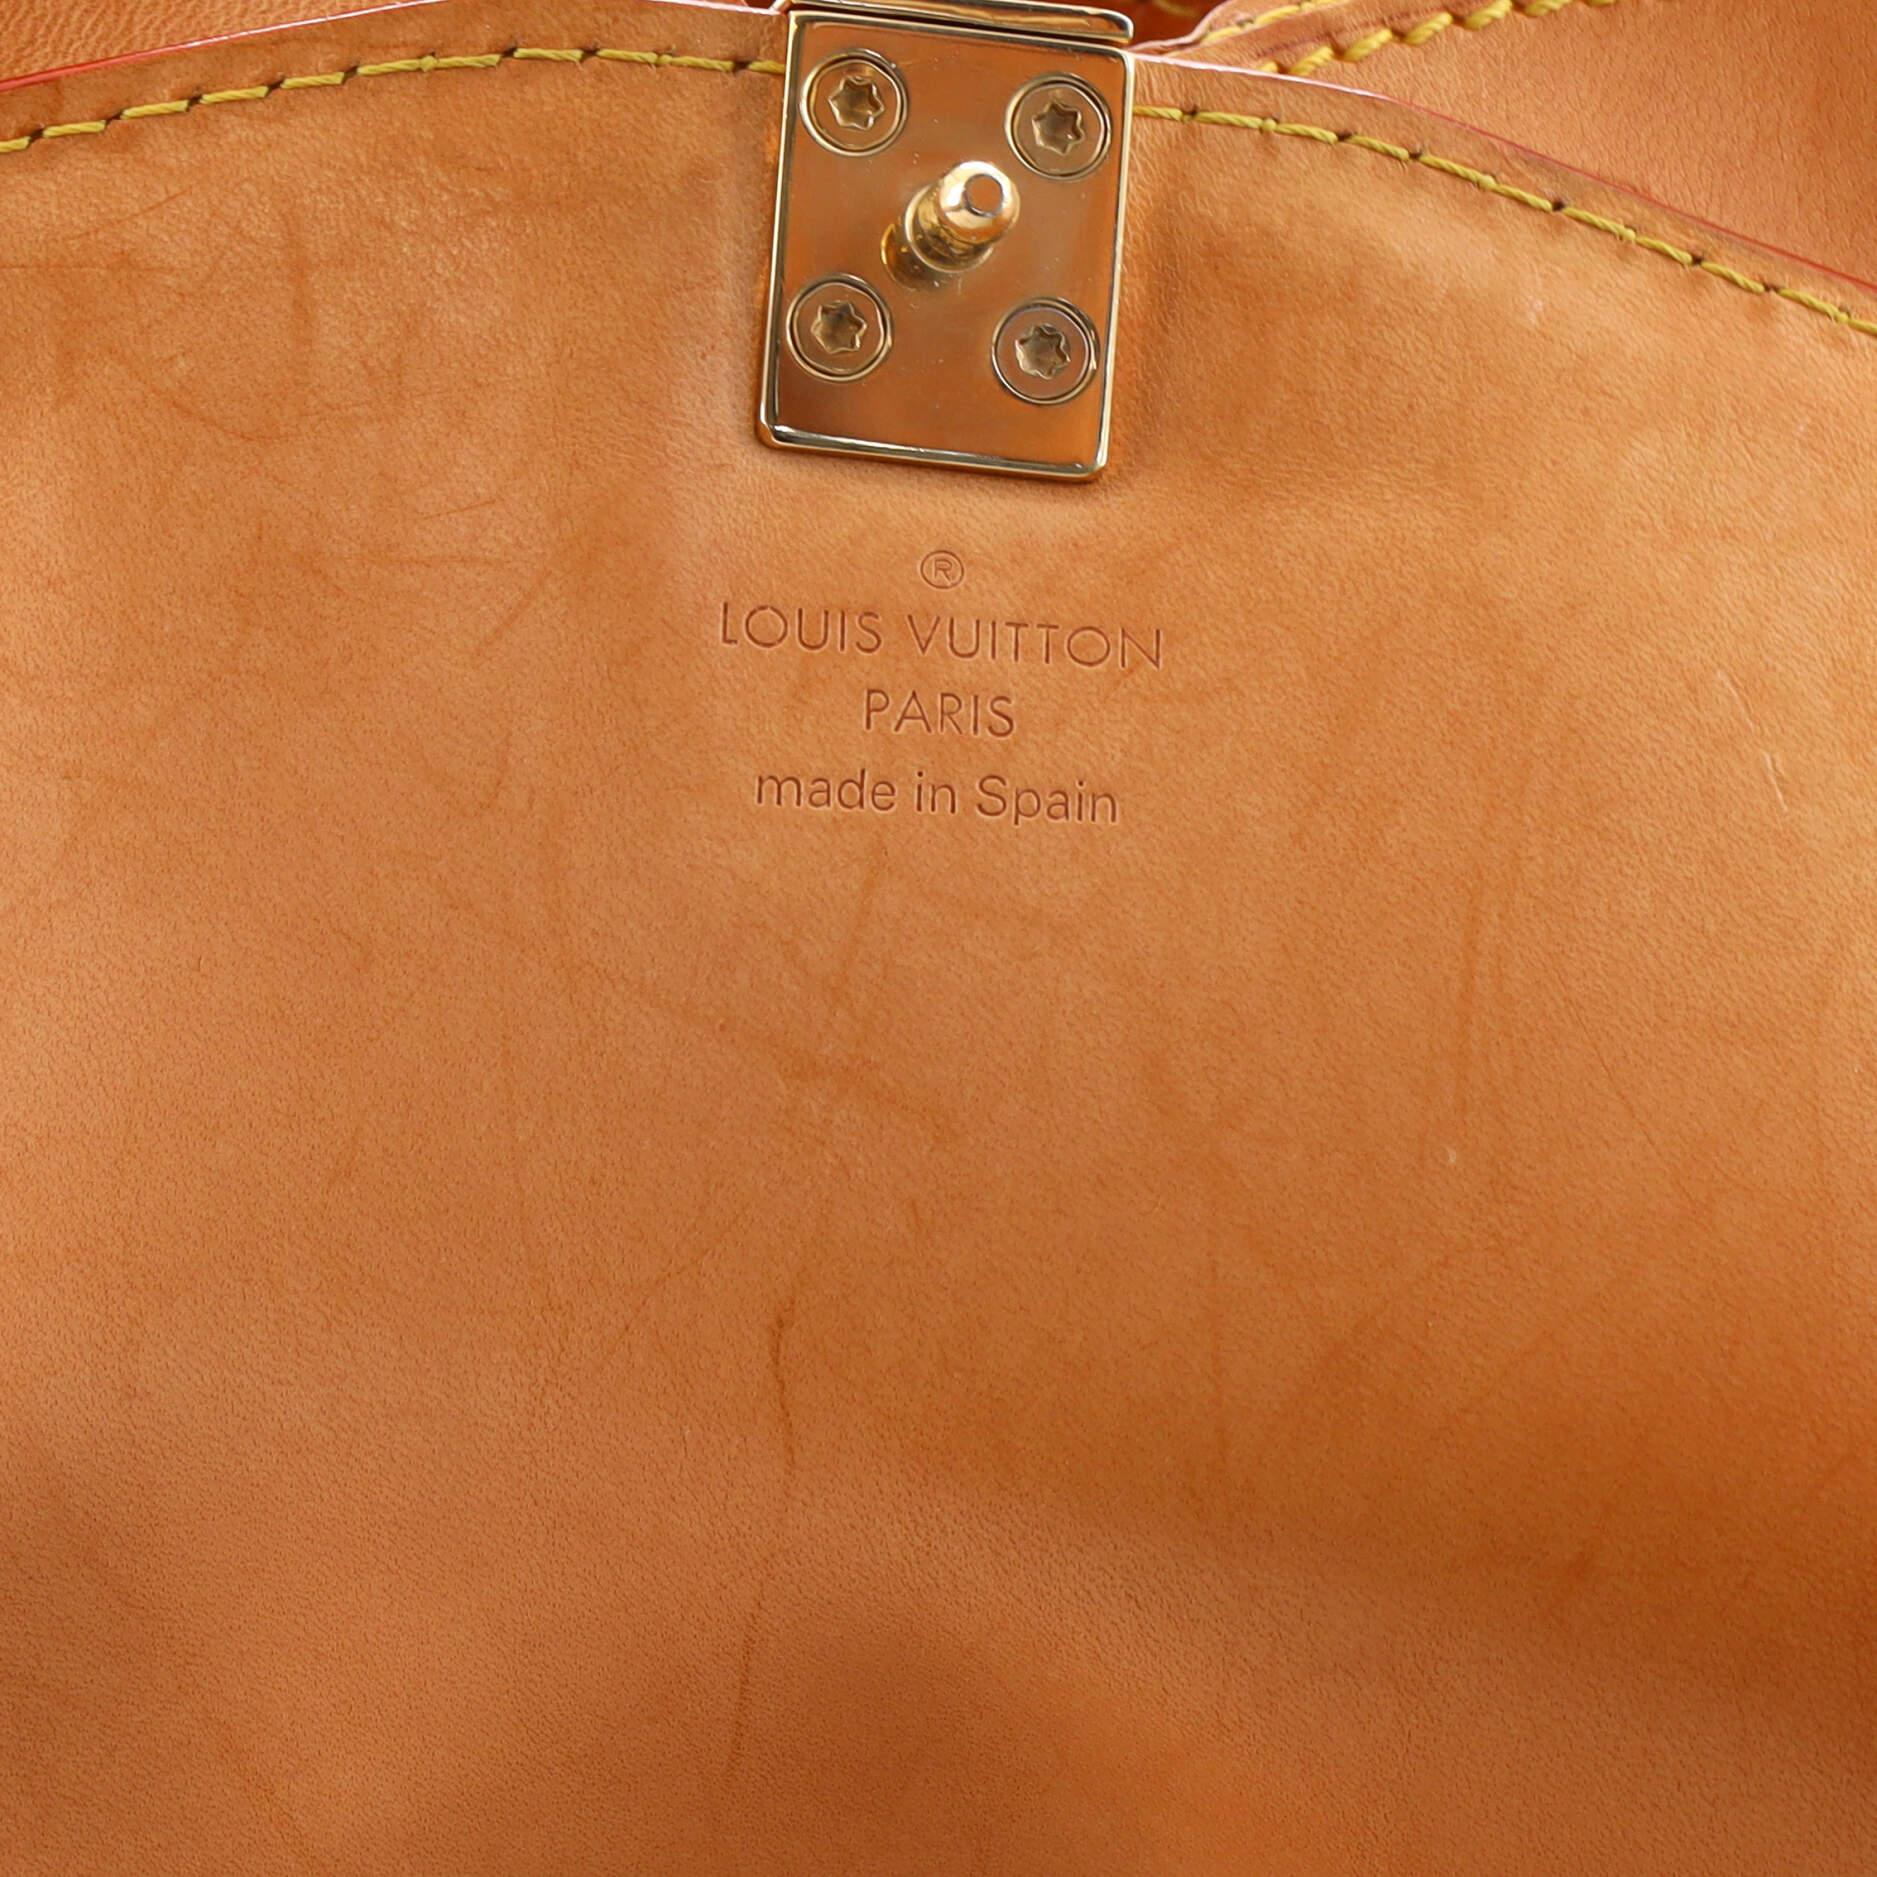 Louis Vuitton Retro Bag Limited Edition Cherry Blossom Monogram 3